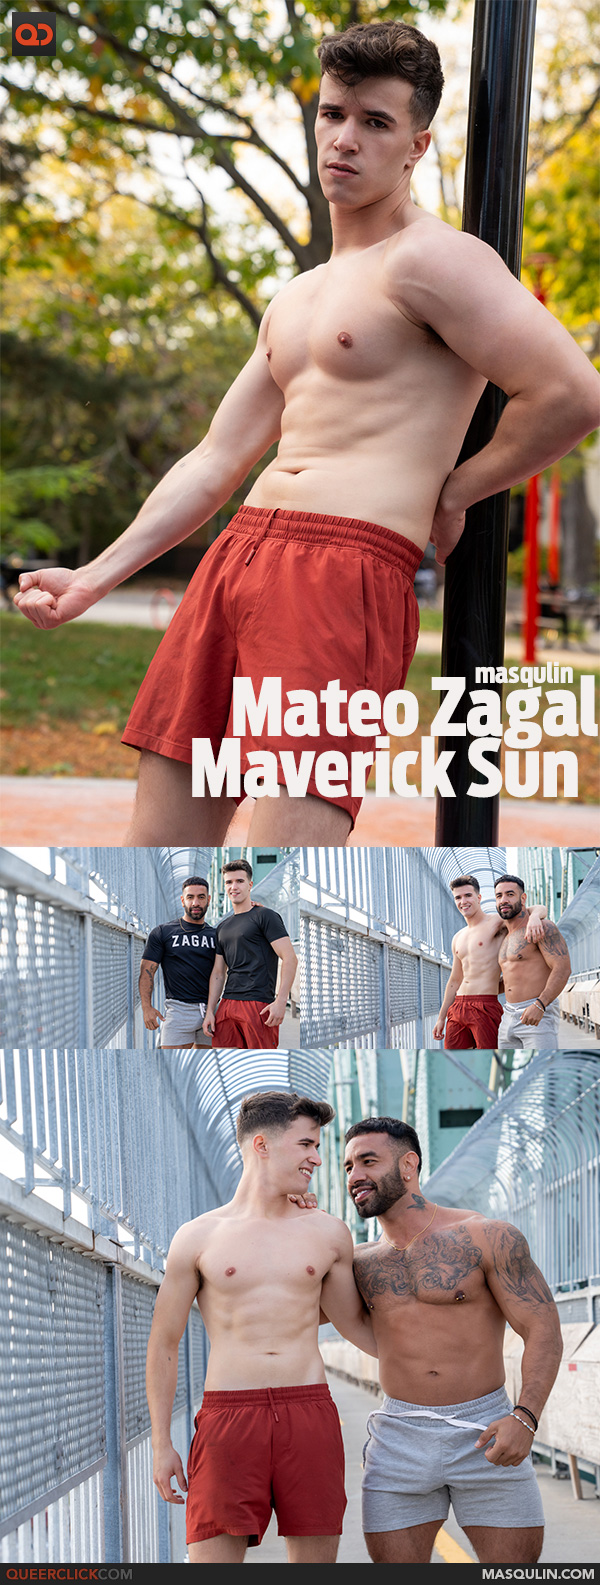 The Bro Network | Masqulin: Mateo Zagal and Maverick Sun - Friendly Competition